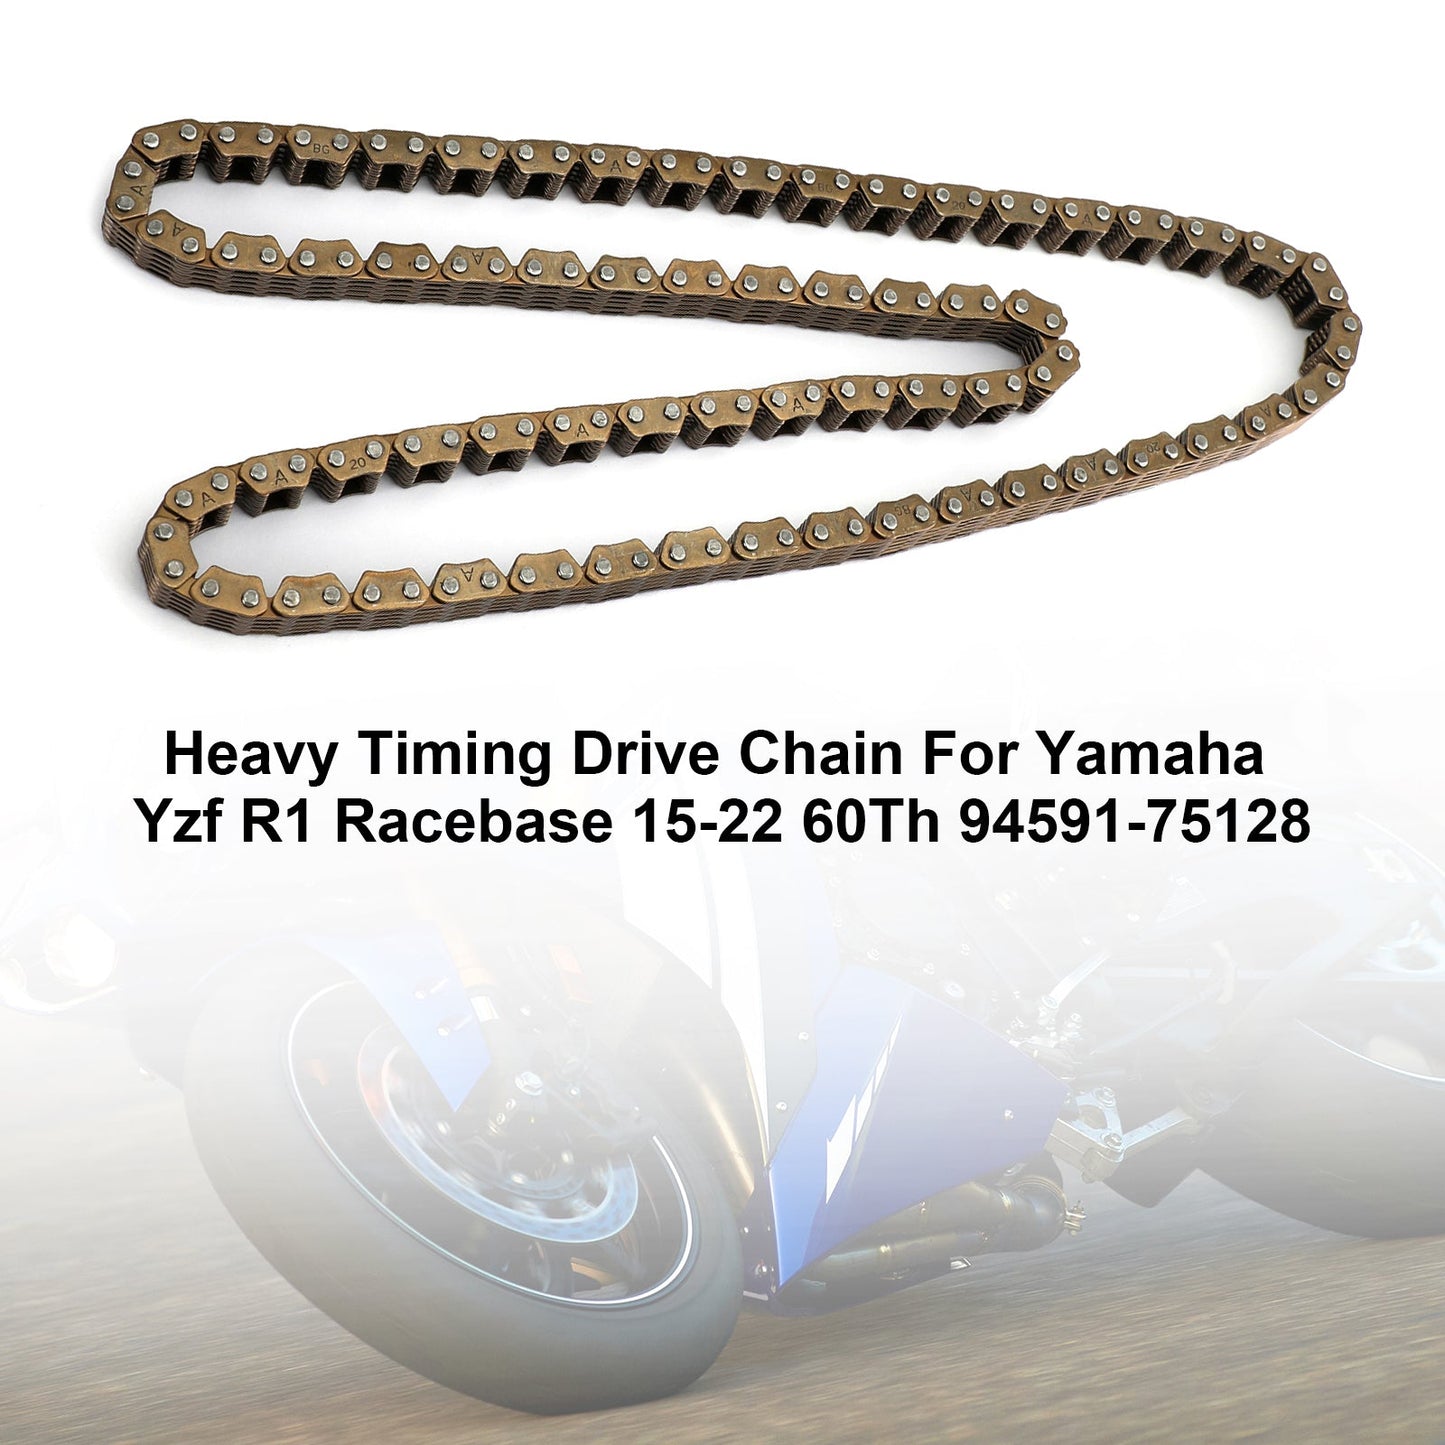 2015-2022 Yamaha Yzf R1 Racebase 60th 94591-75128 Antriebskette Hochleistungskette